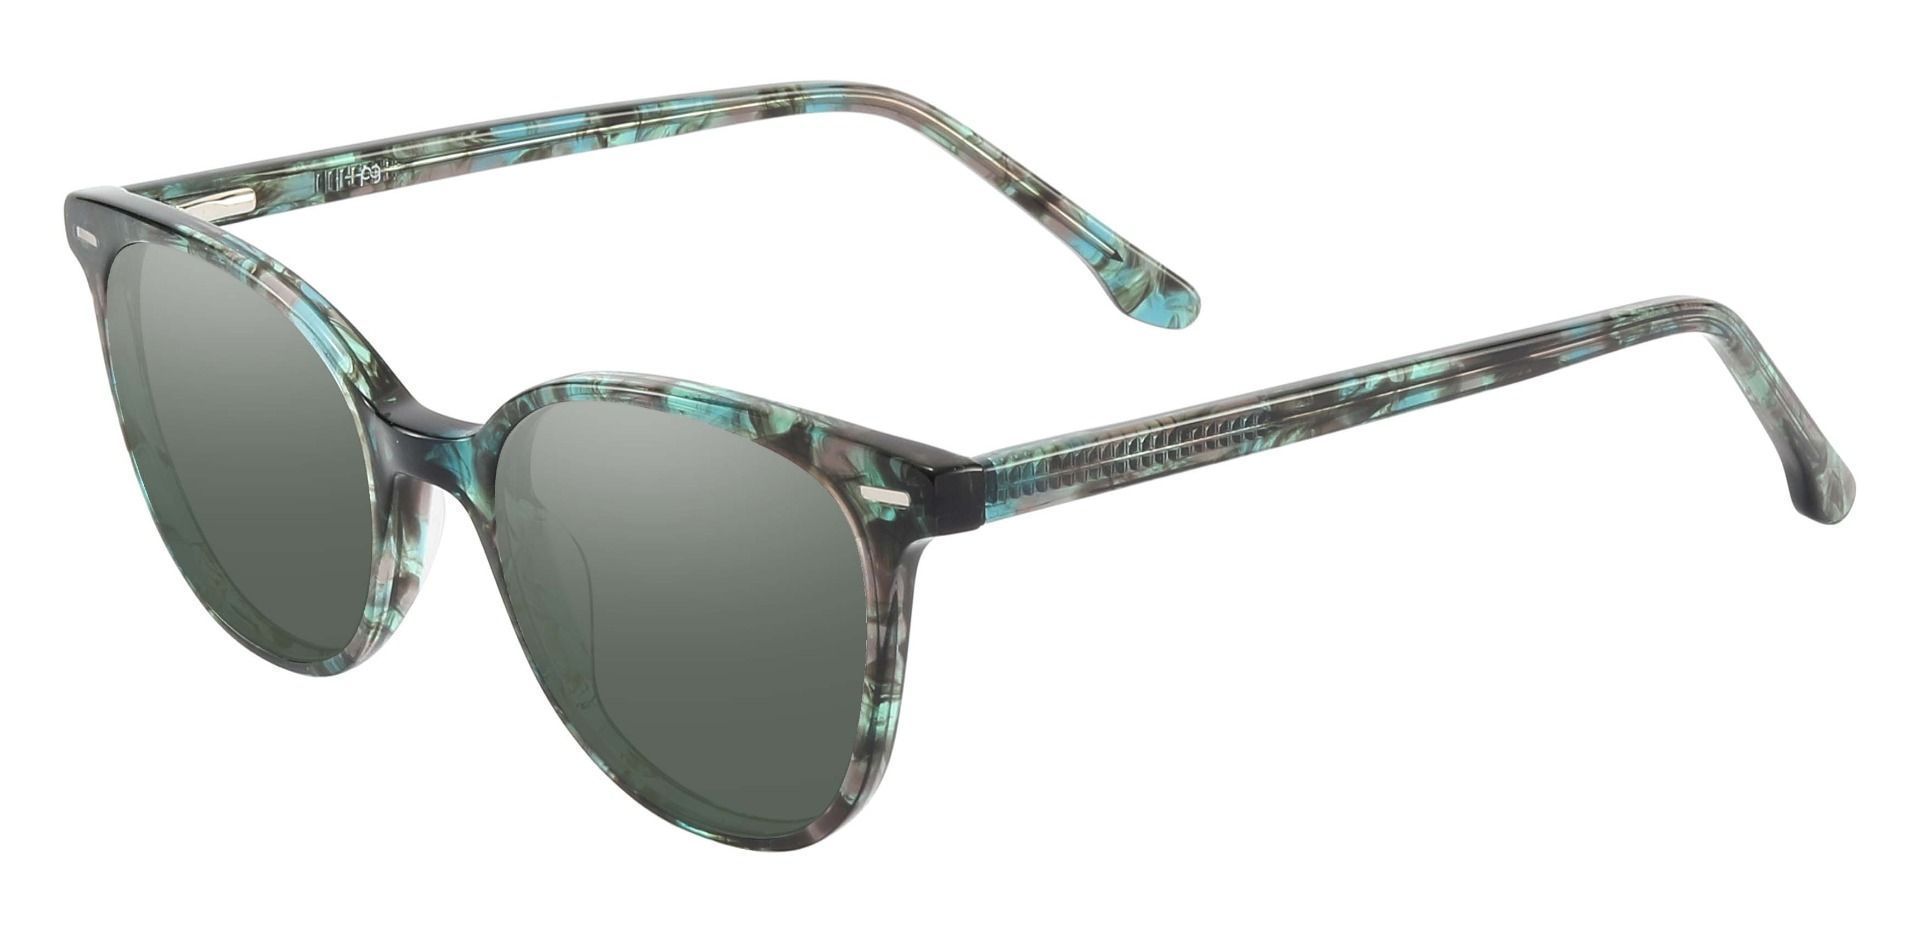 Chili Oval Prescription Sunglasses - Green Frame With Green Lenses